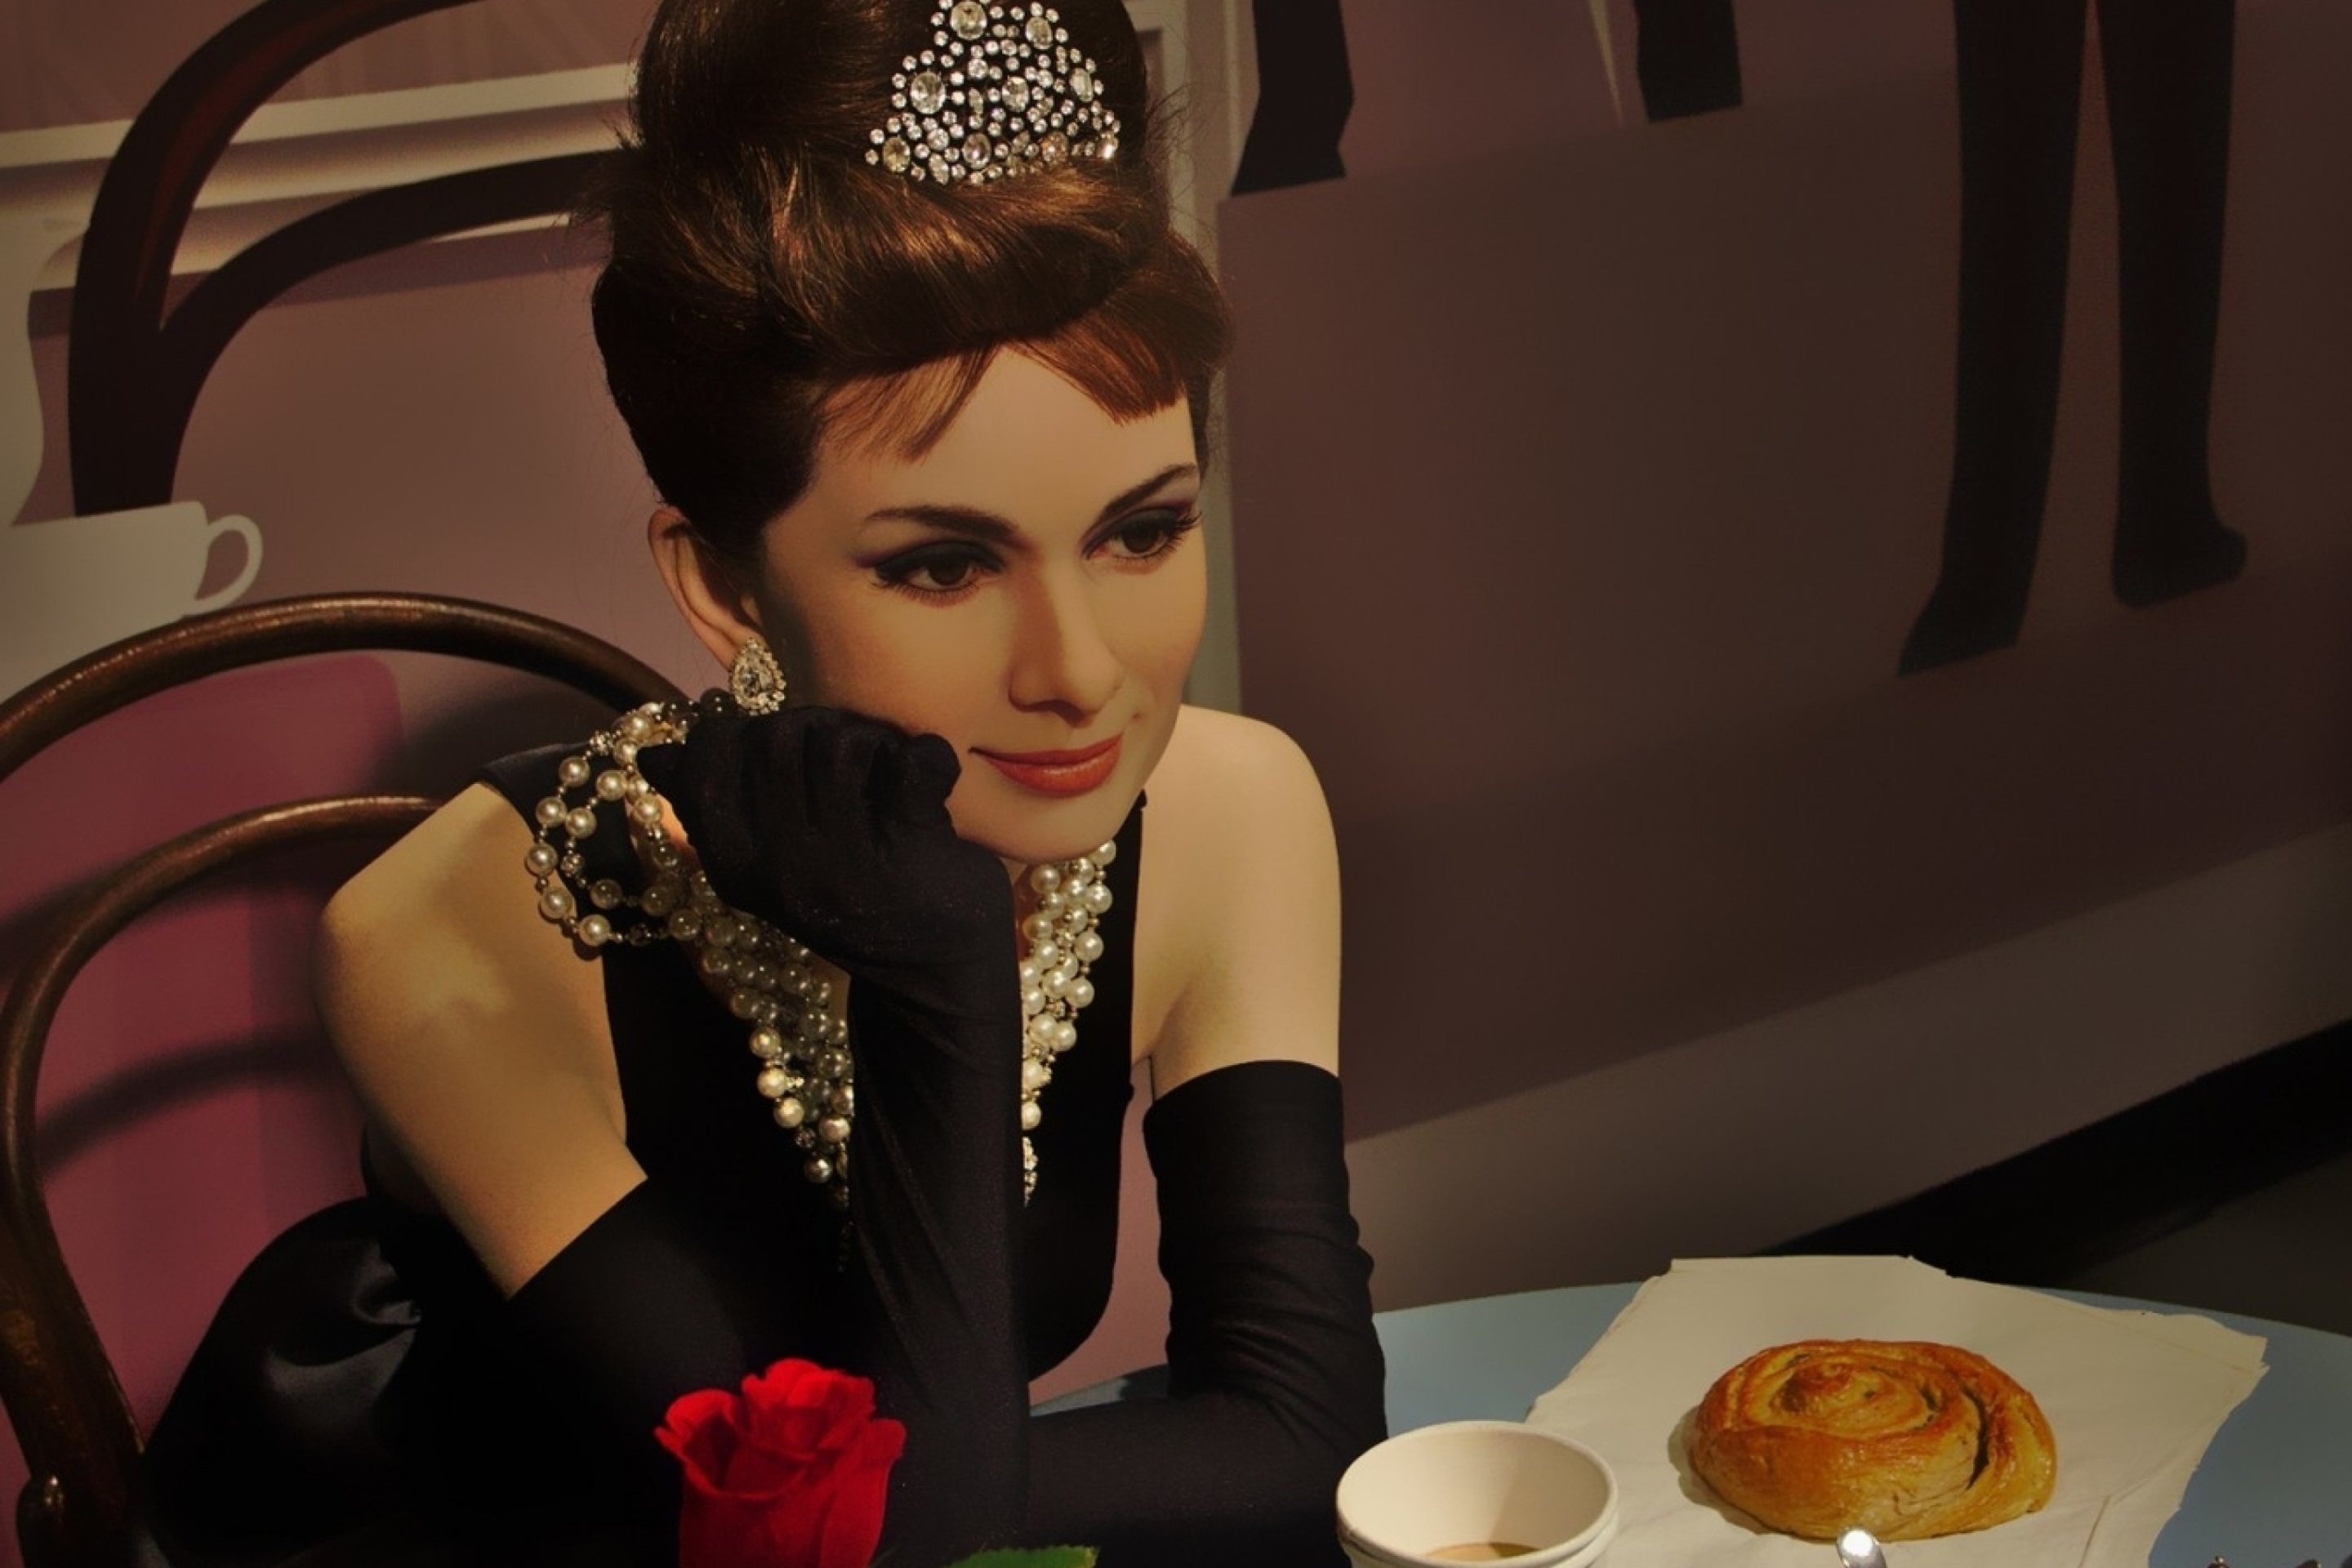 Breakfast at Tiffanys Audrey Hepburn wallpaper 2880x1920